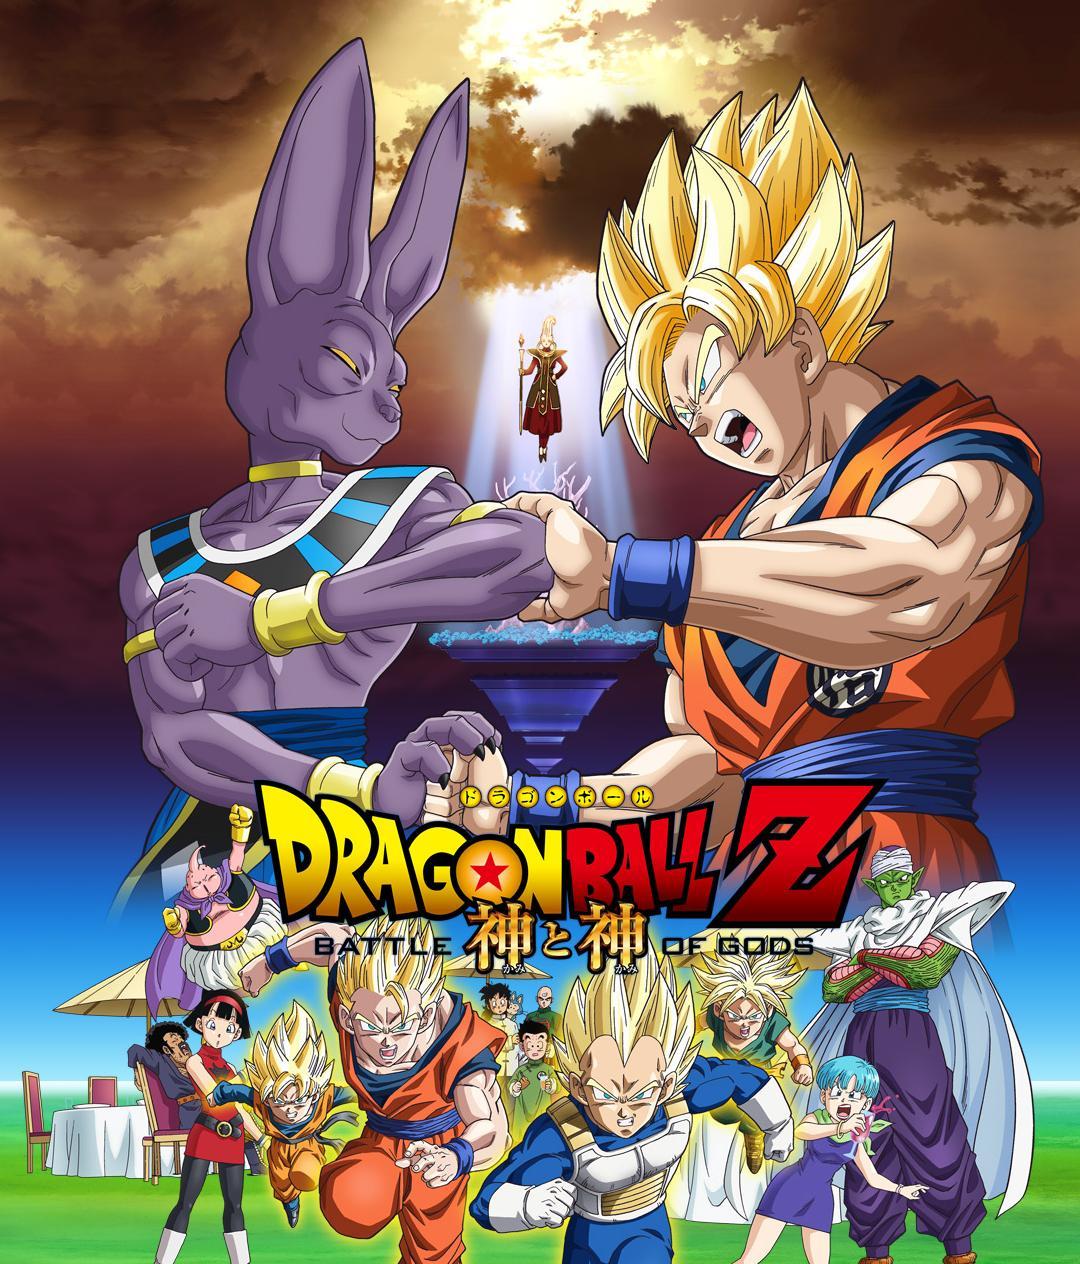 Dragon Ball Z: Battle of Gods. Ultra Dragon Ball